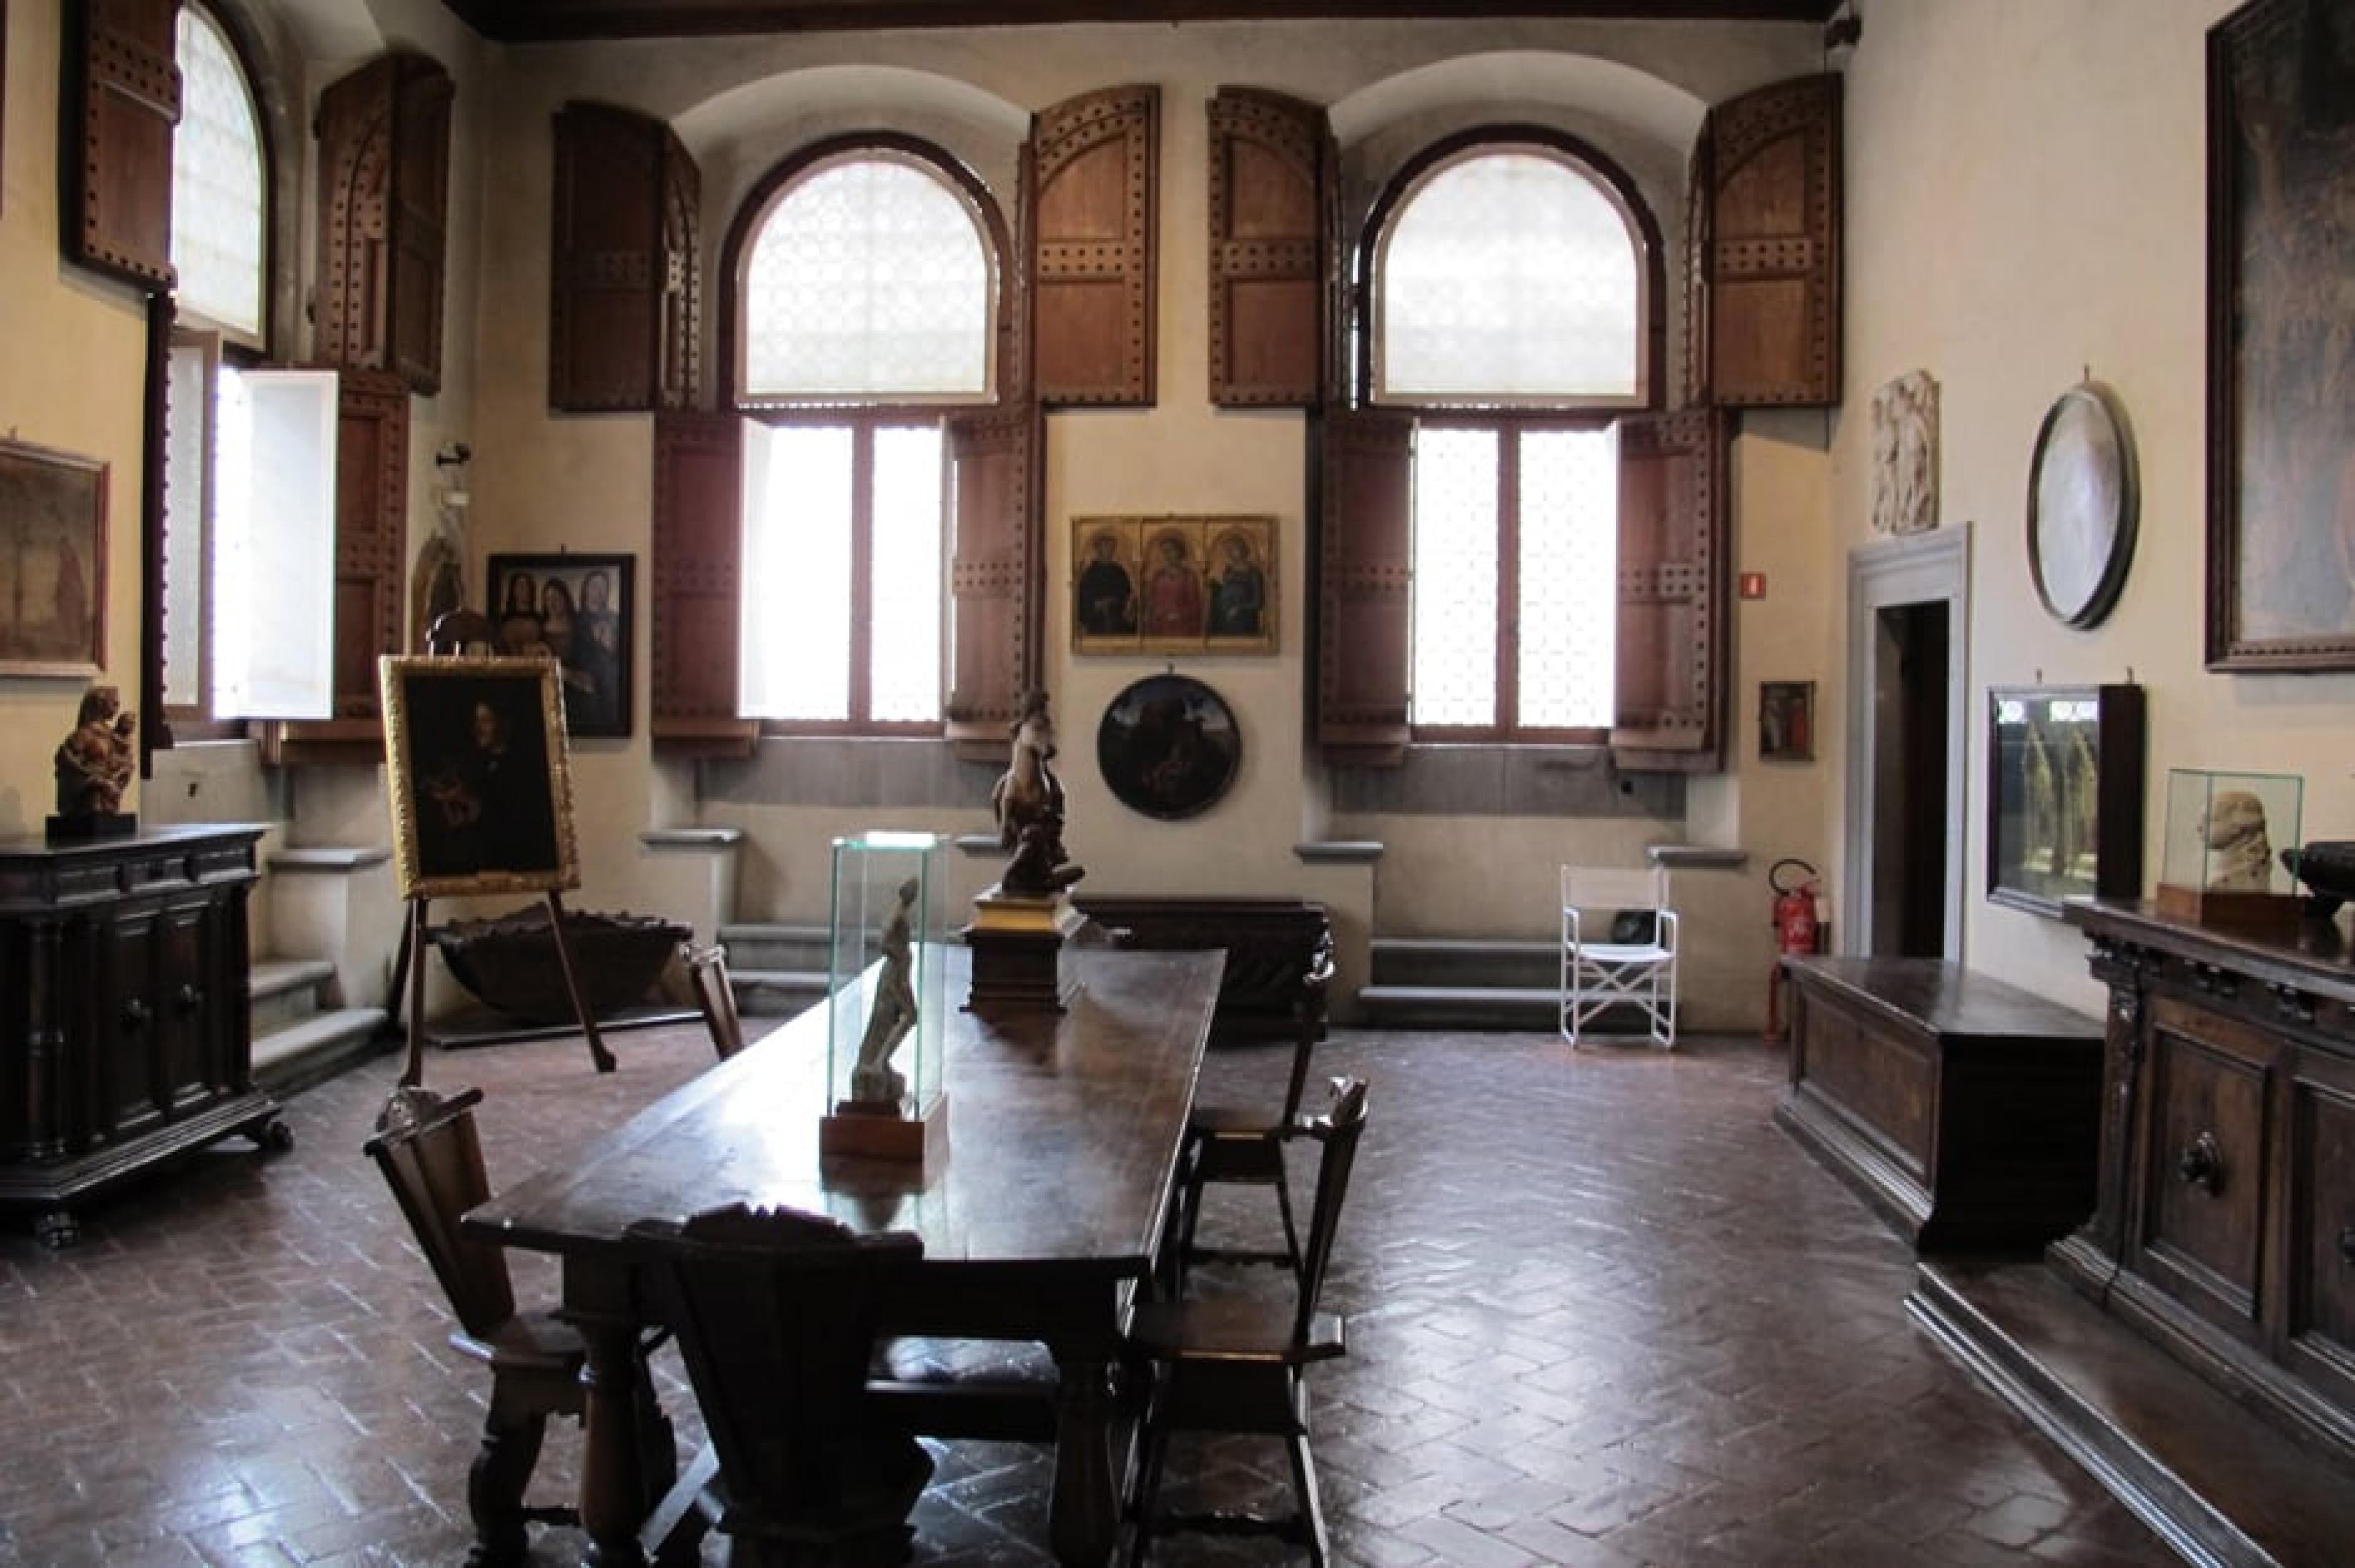 Interior View - Palazzo Strozzi, Florence, Italy - Courtesy Sai L. Ko